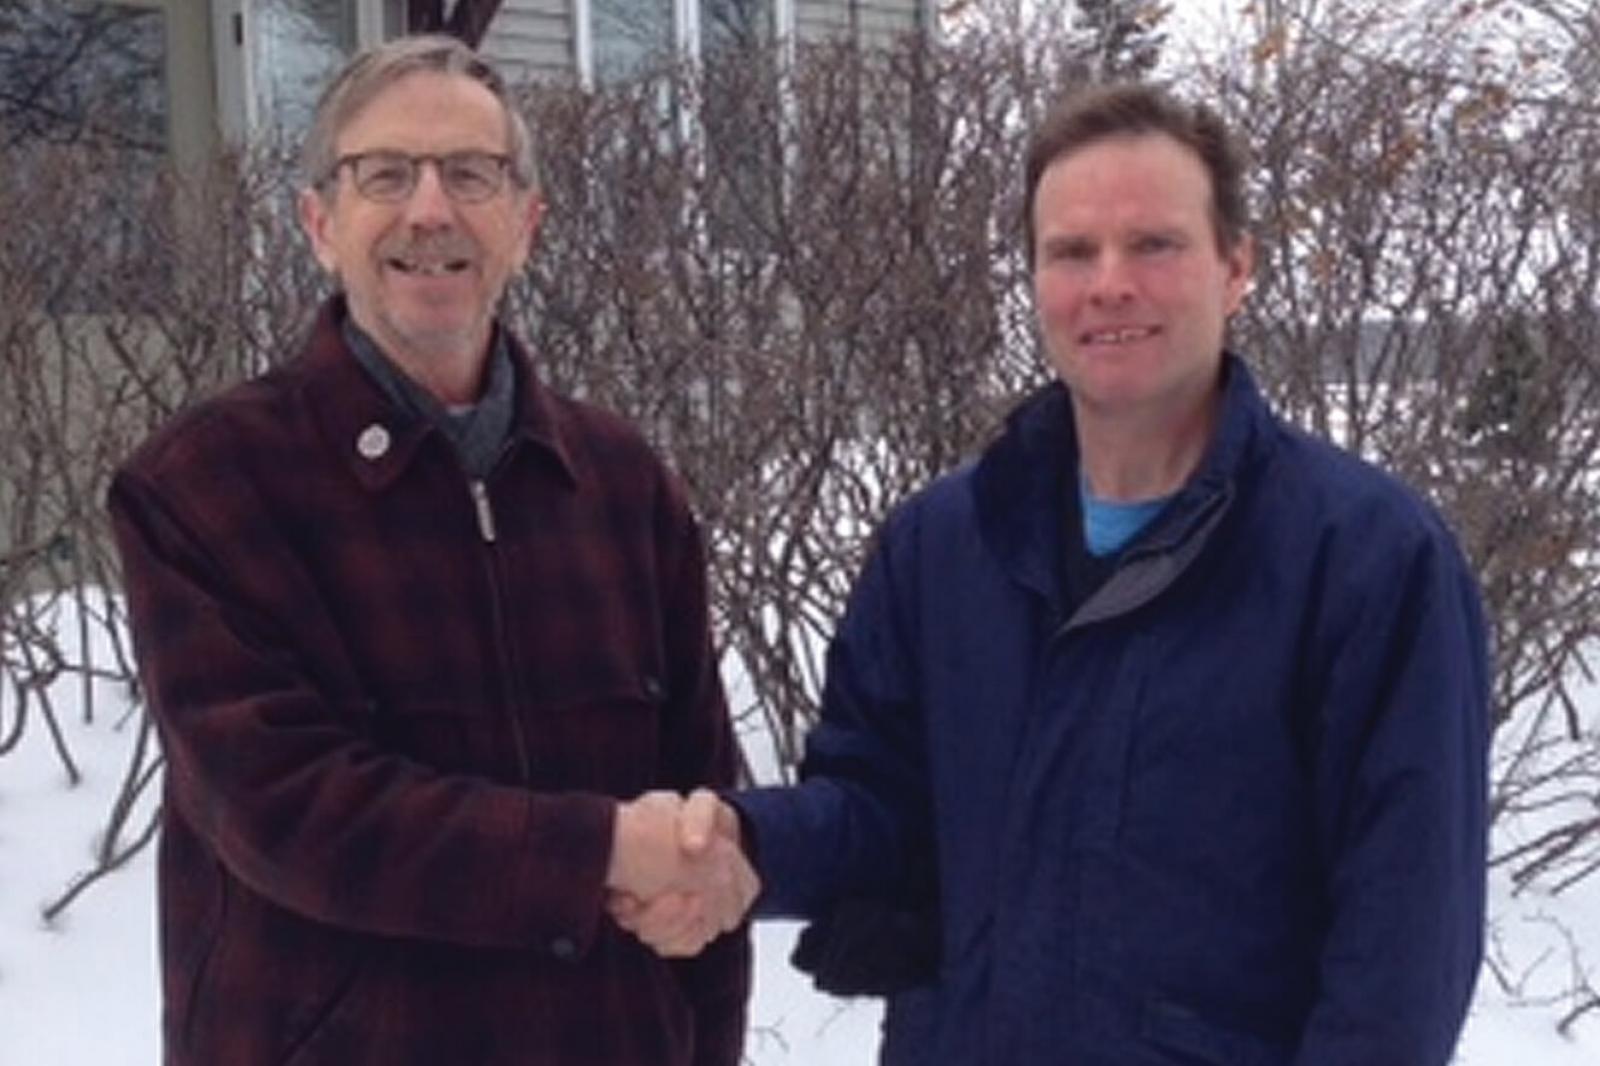 Richard Rogers welcomes new owner of R.J. Rogers Landscaping, Geoffrey Pratt.